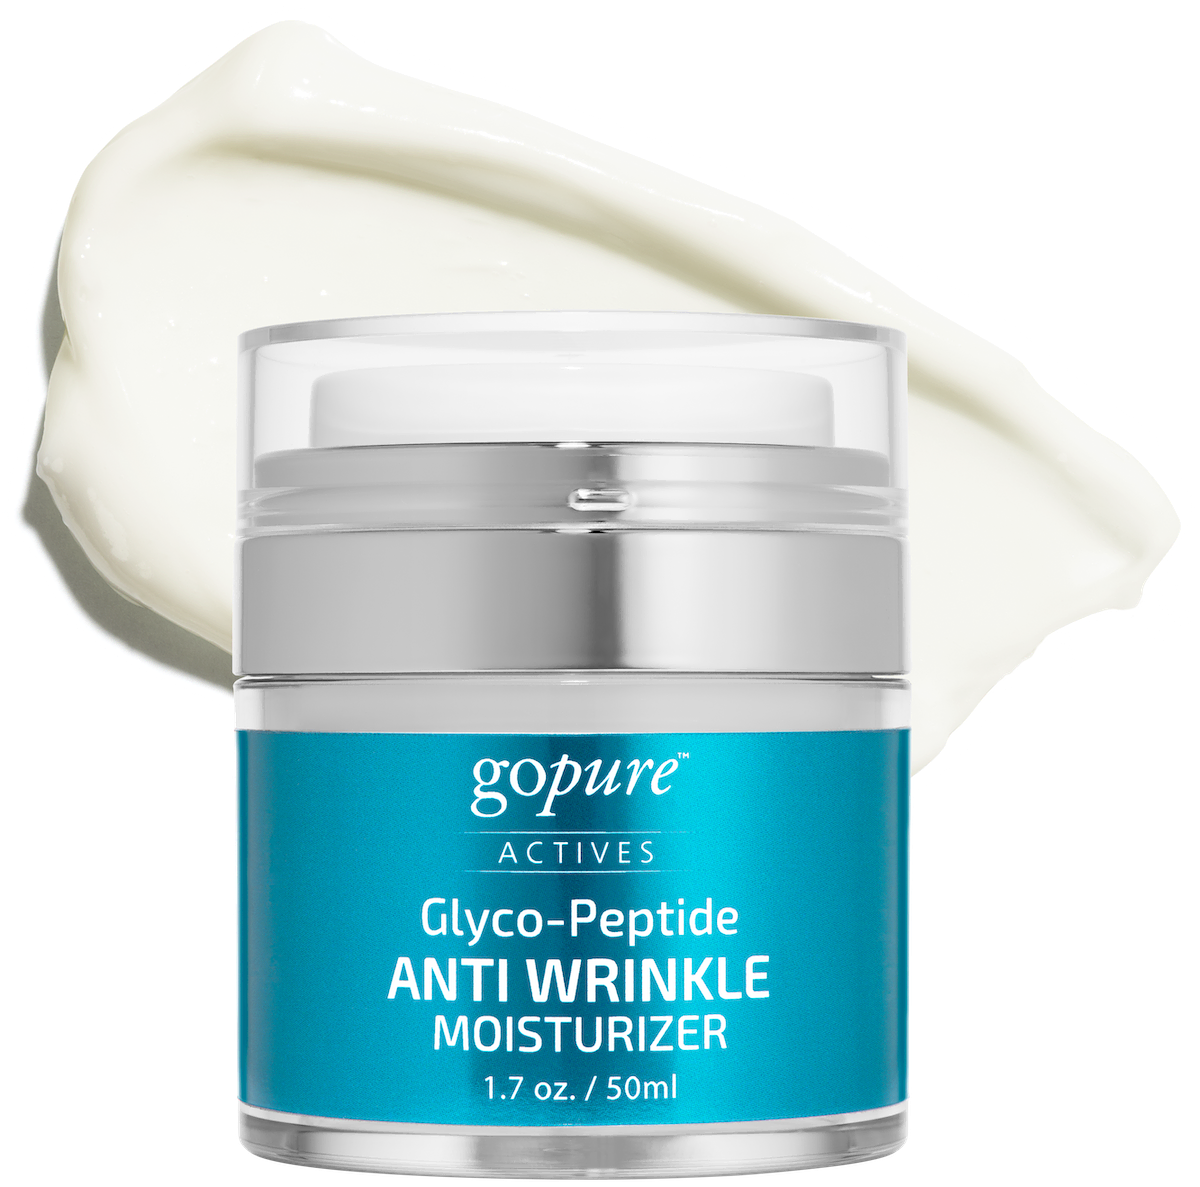 Glyco-Peptide Anti Wrinkle Moisturizer